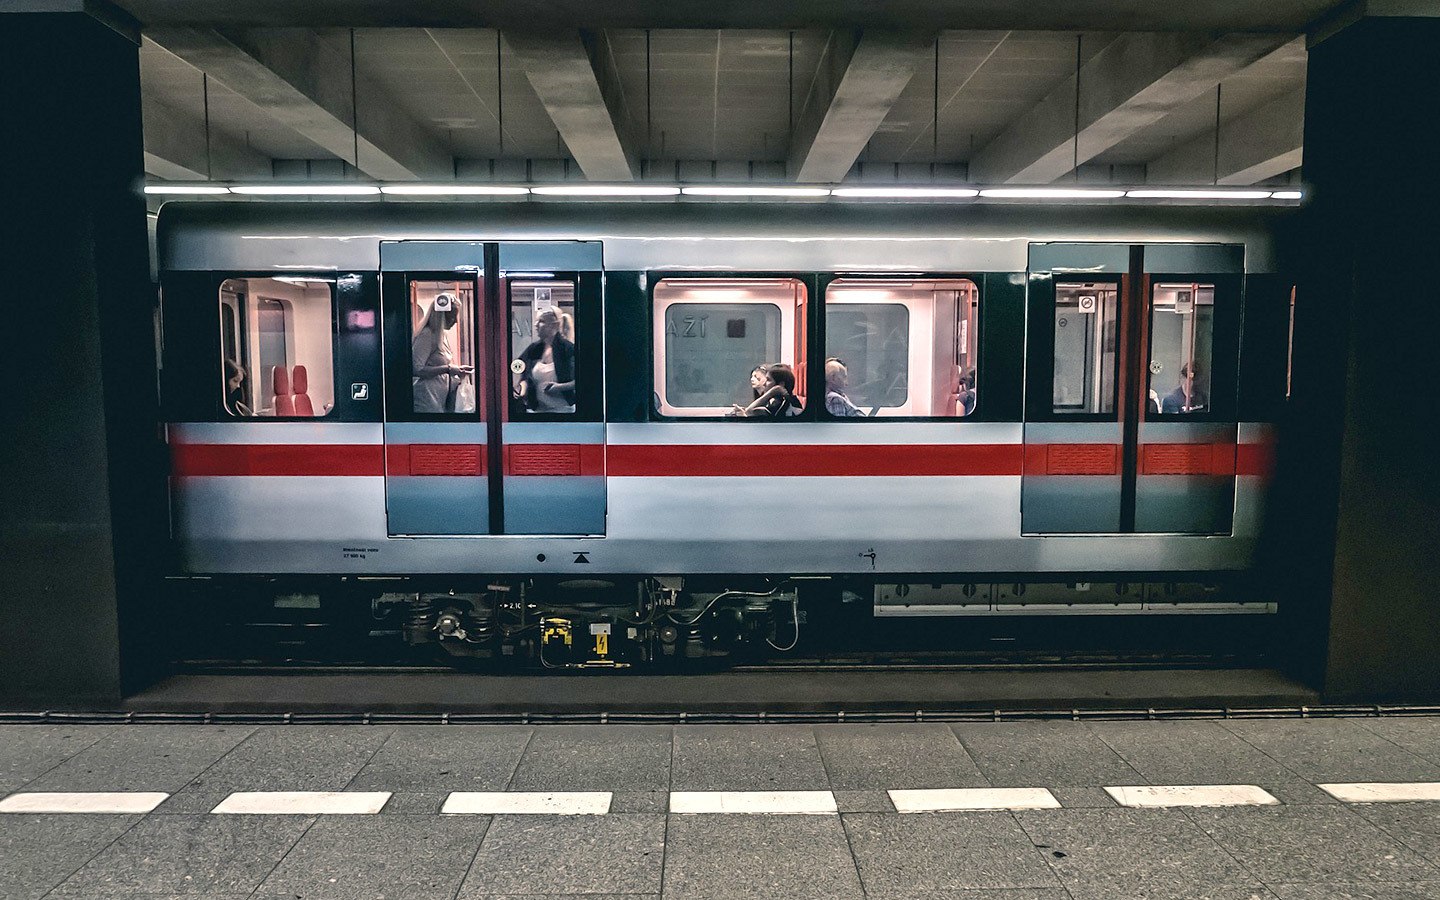 Prague Metro train in a station